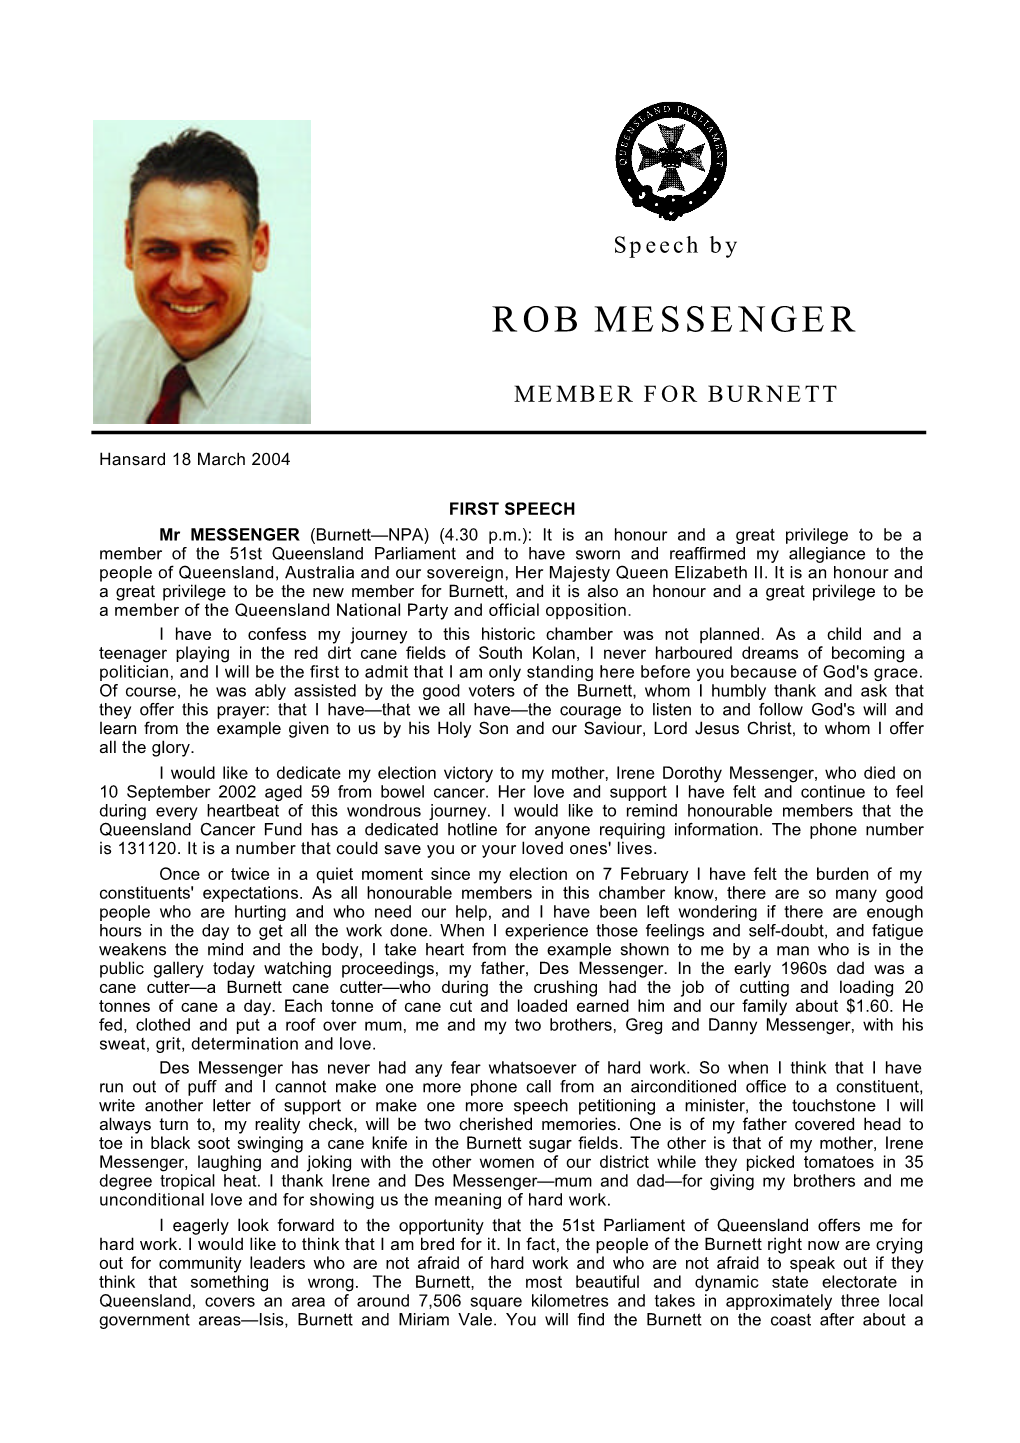 Rob Messenger